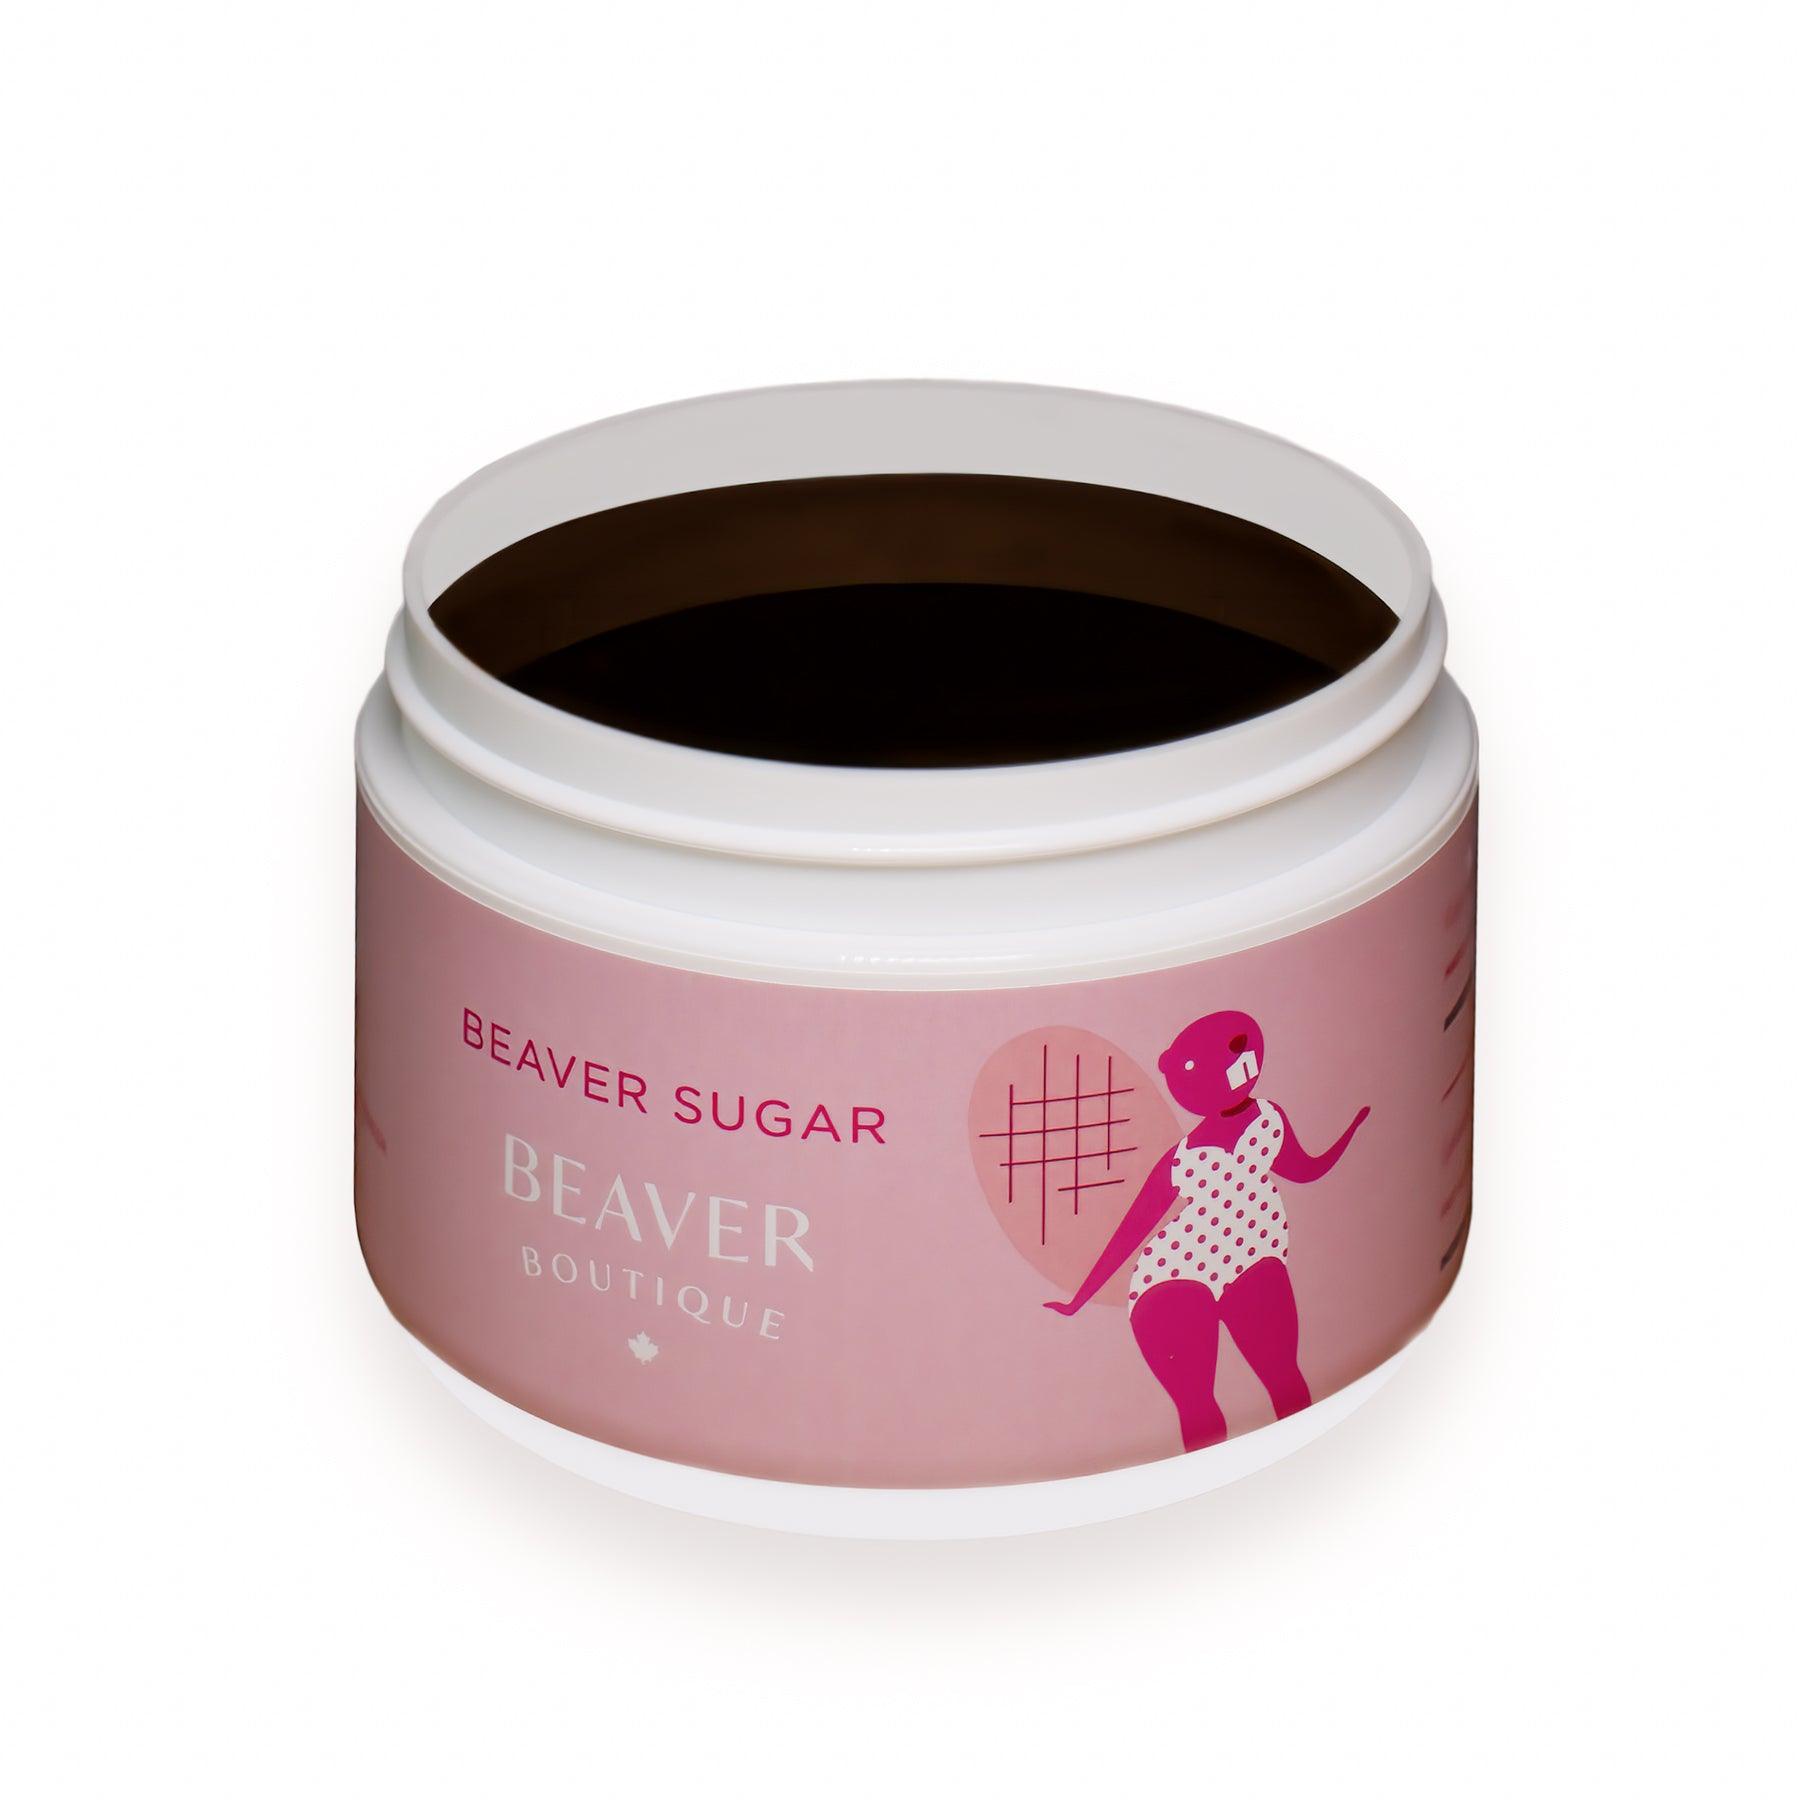 Beaver Sugar Wax Kit – Safe, Effective & Organic Hair Removal Kit - Beaver Boutique